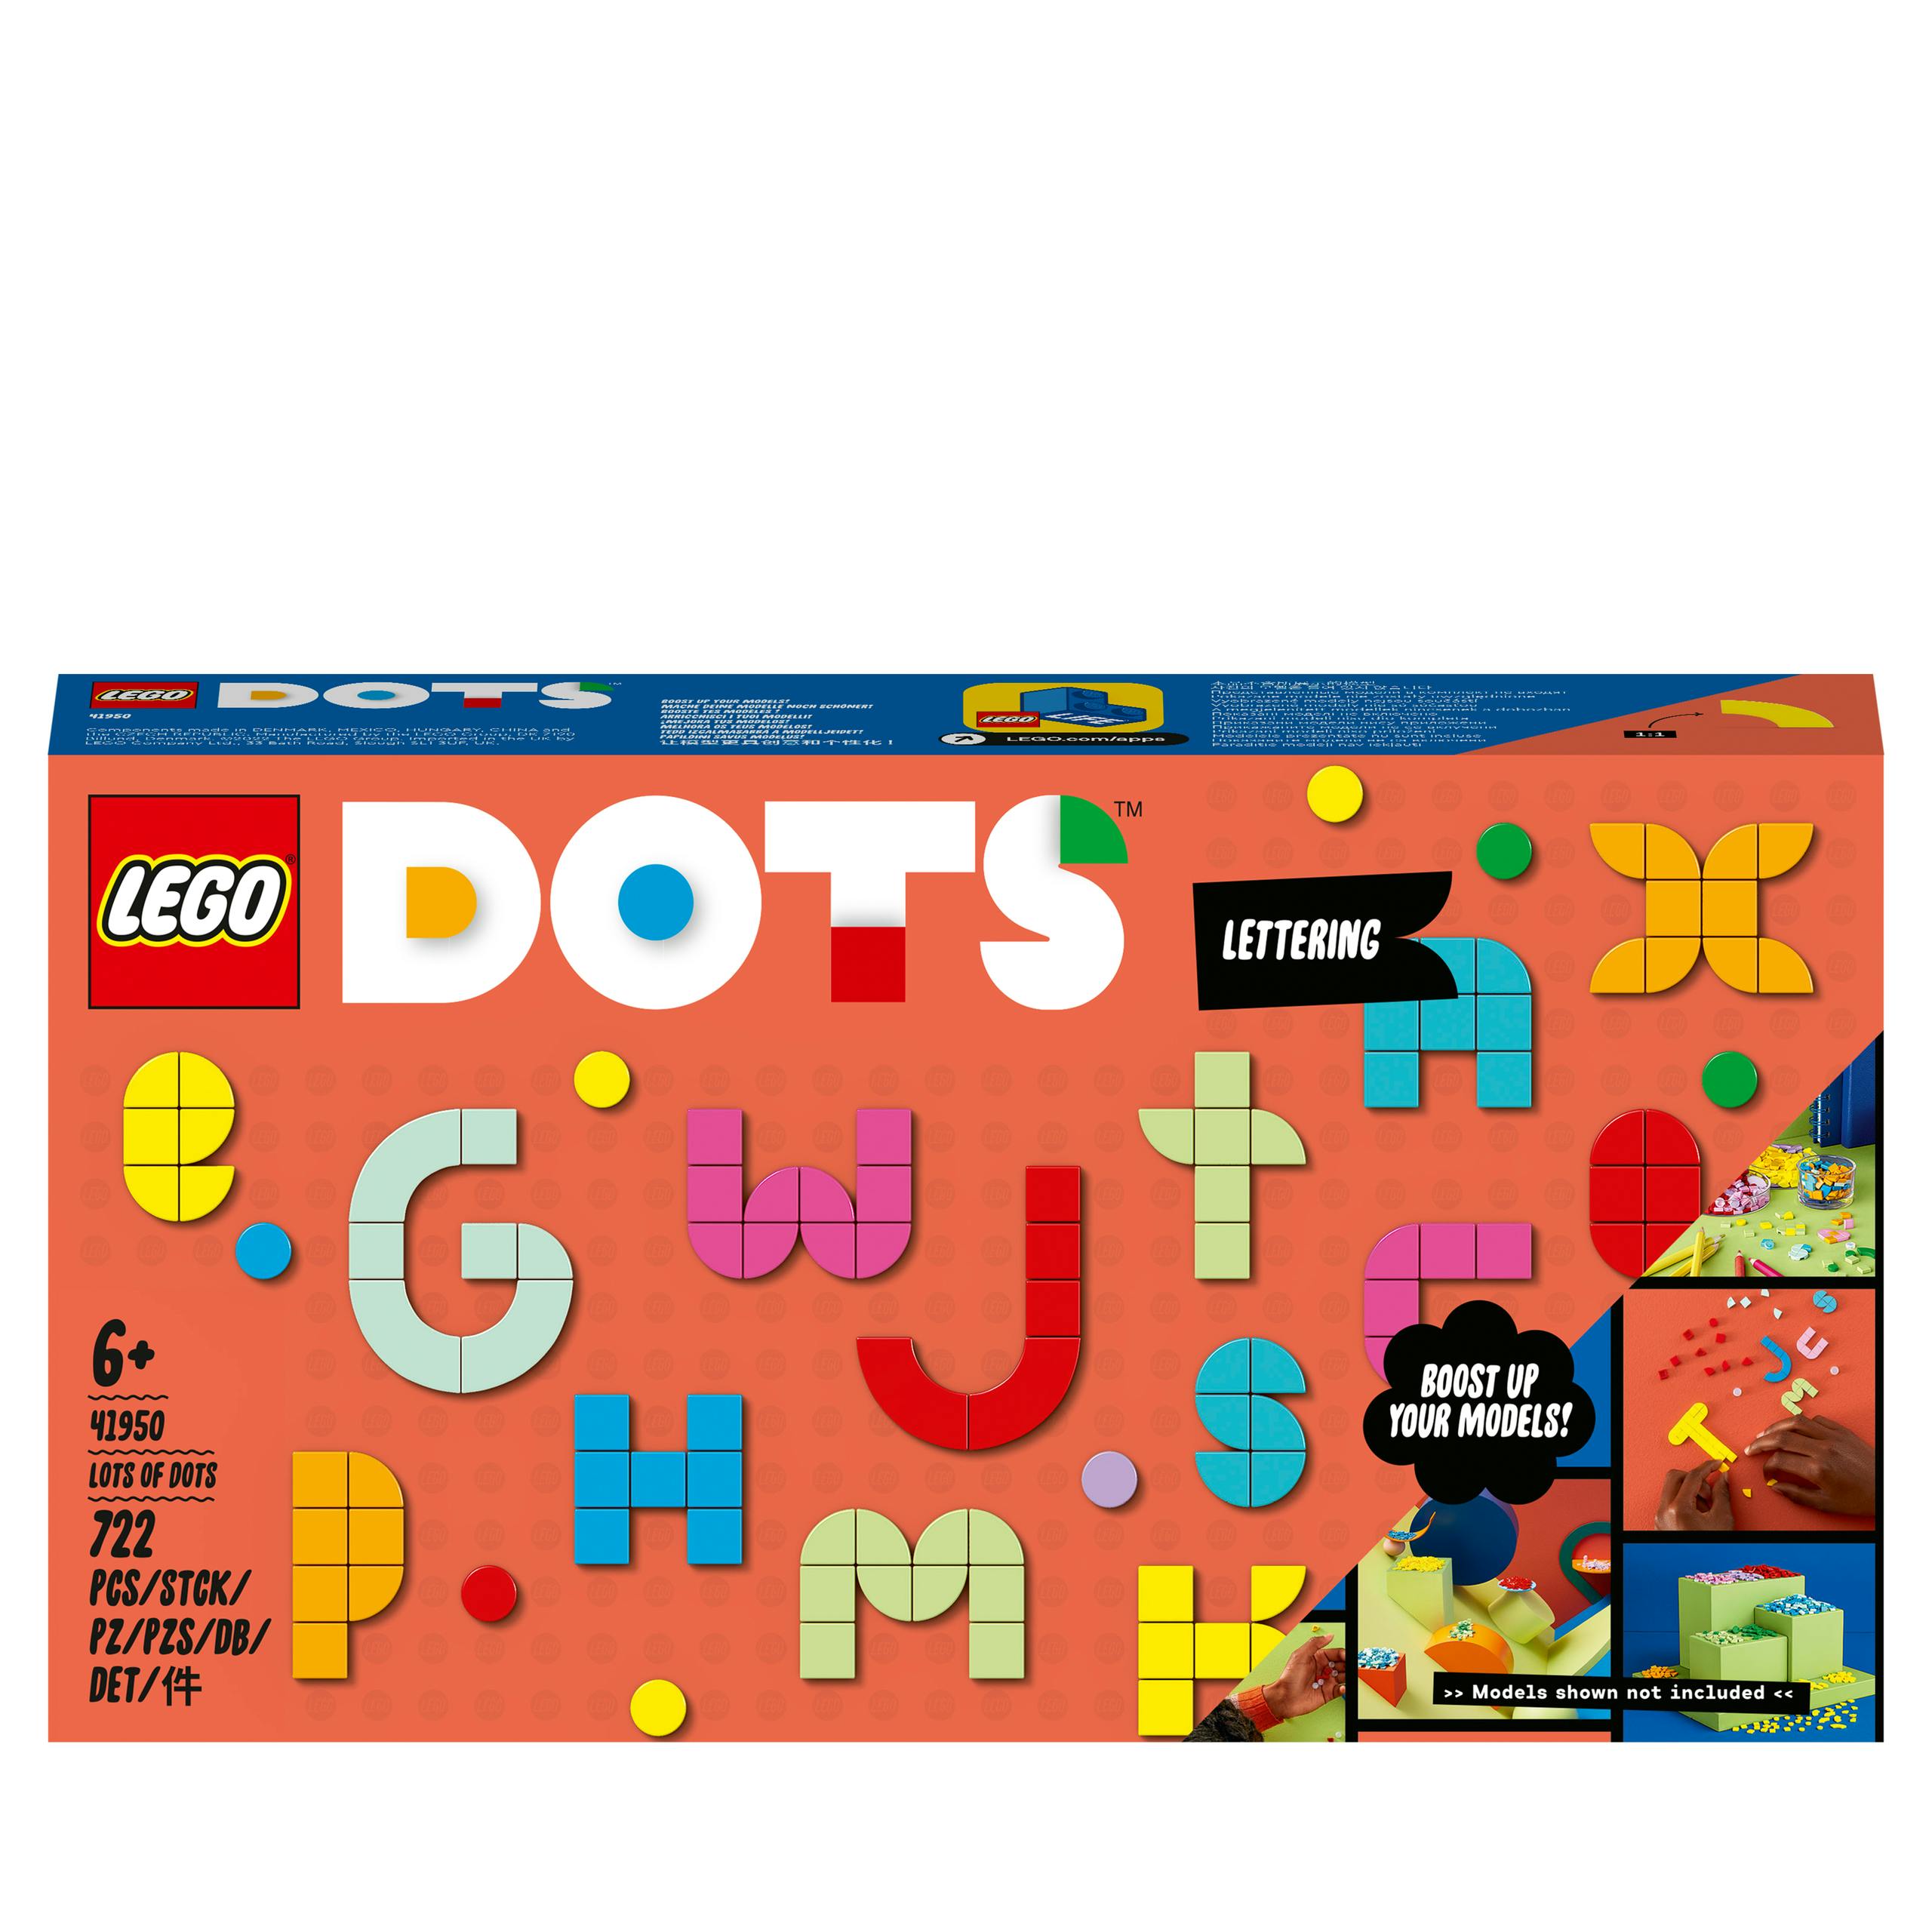 LEGO DOTS Enorm Veel DOTS – Letterpret Diy Craft (41950)